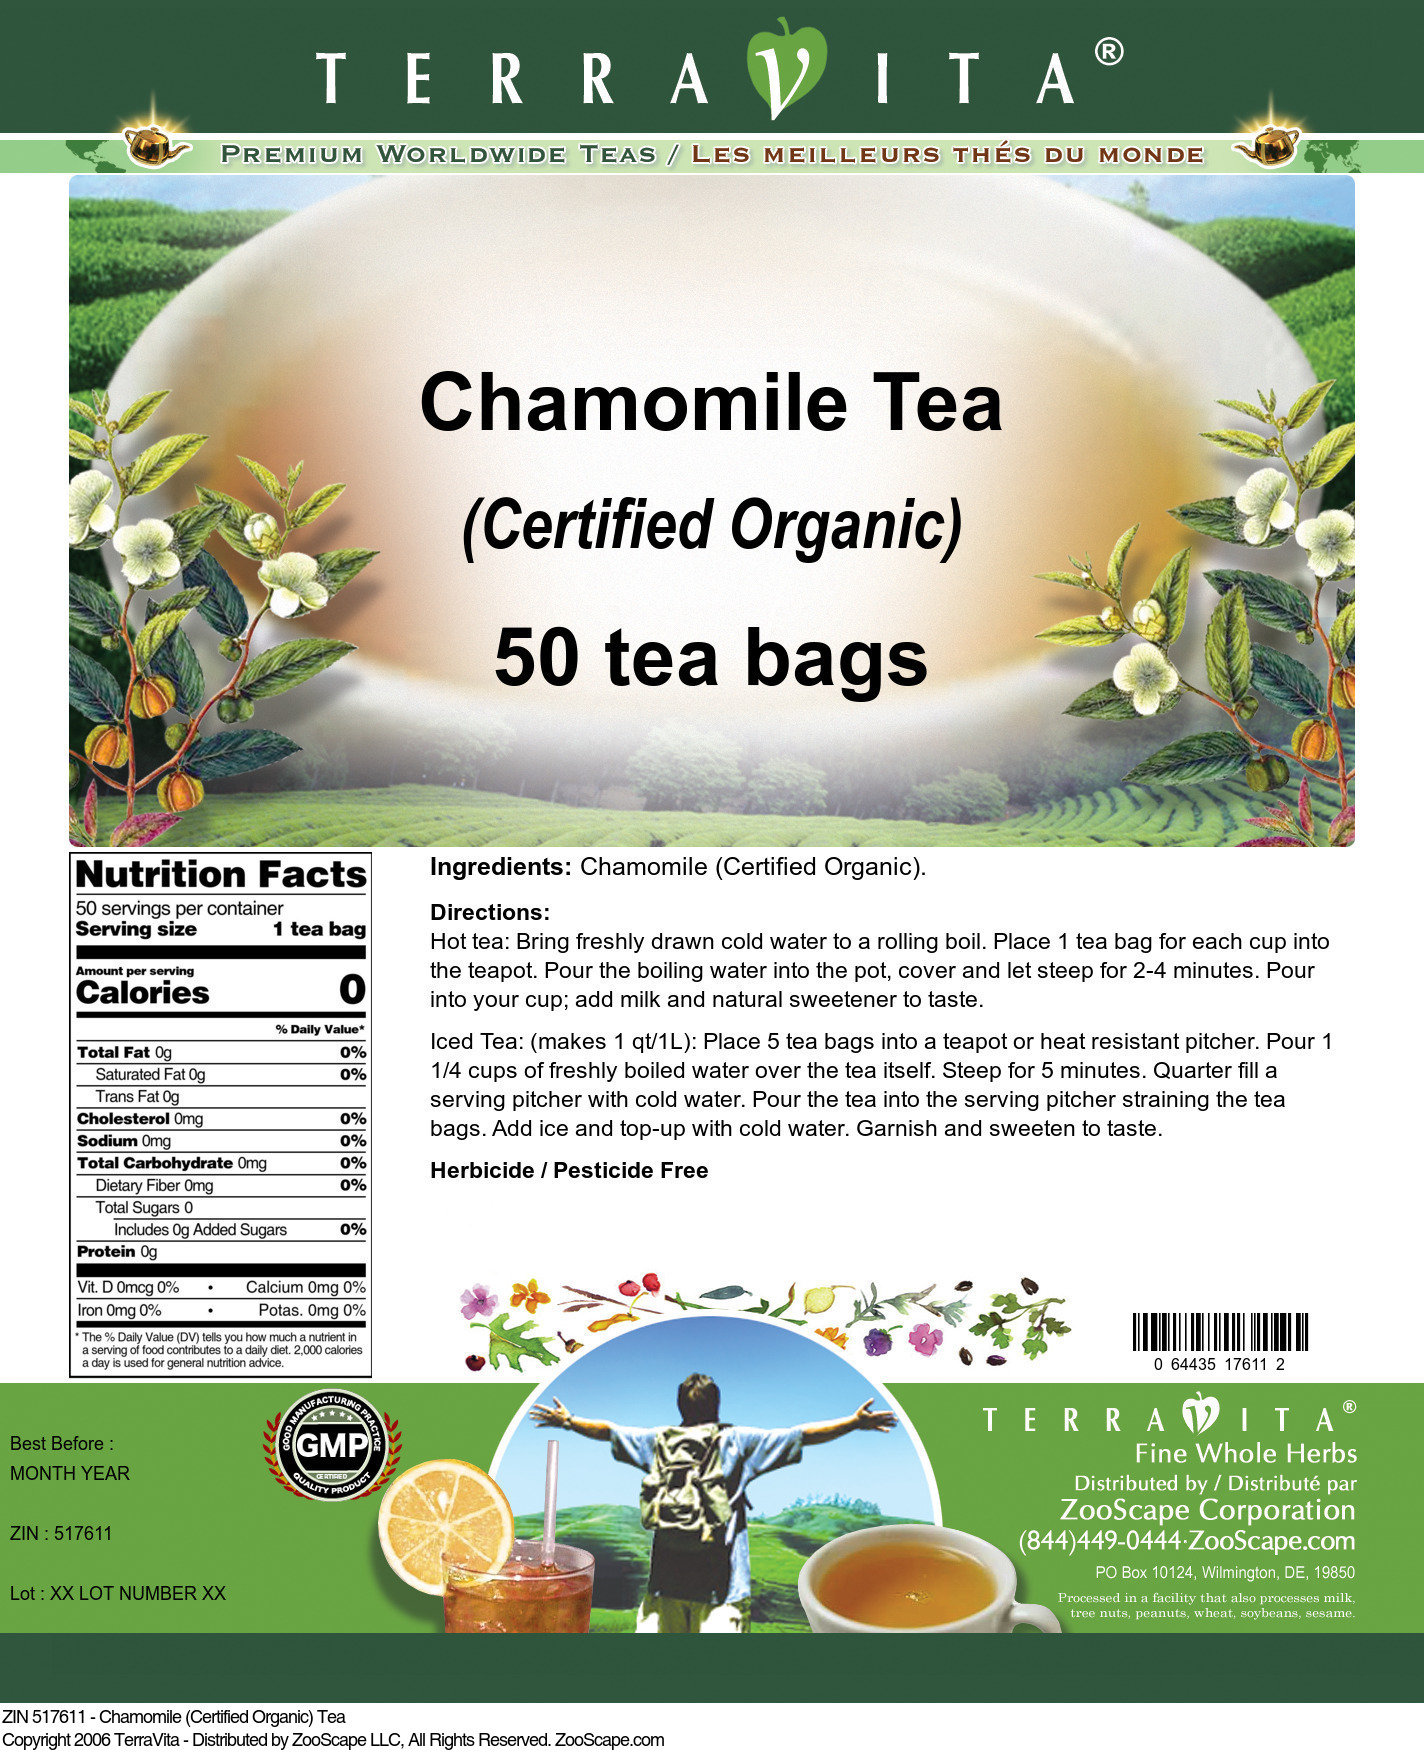 Chamomile (Certified Organic) Tea - Label